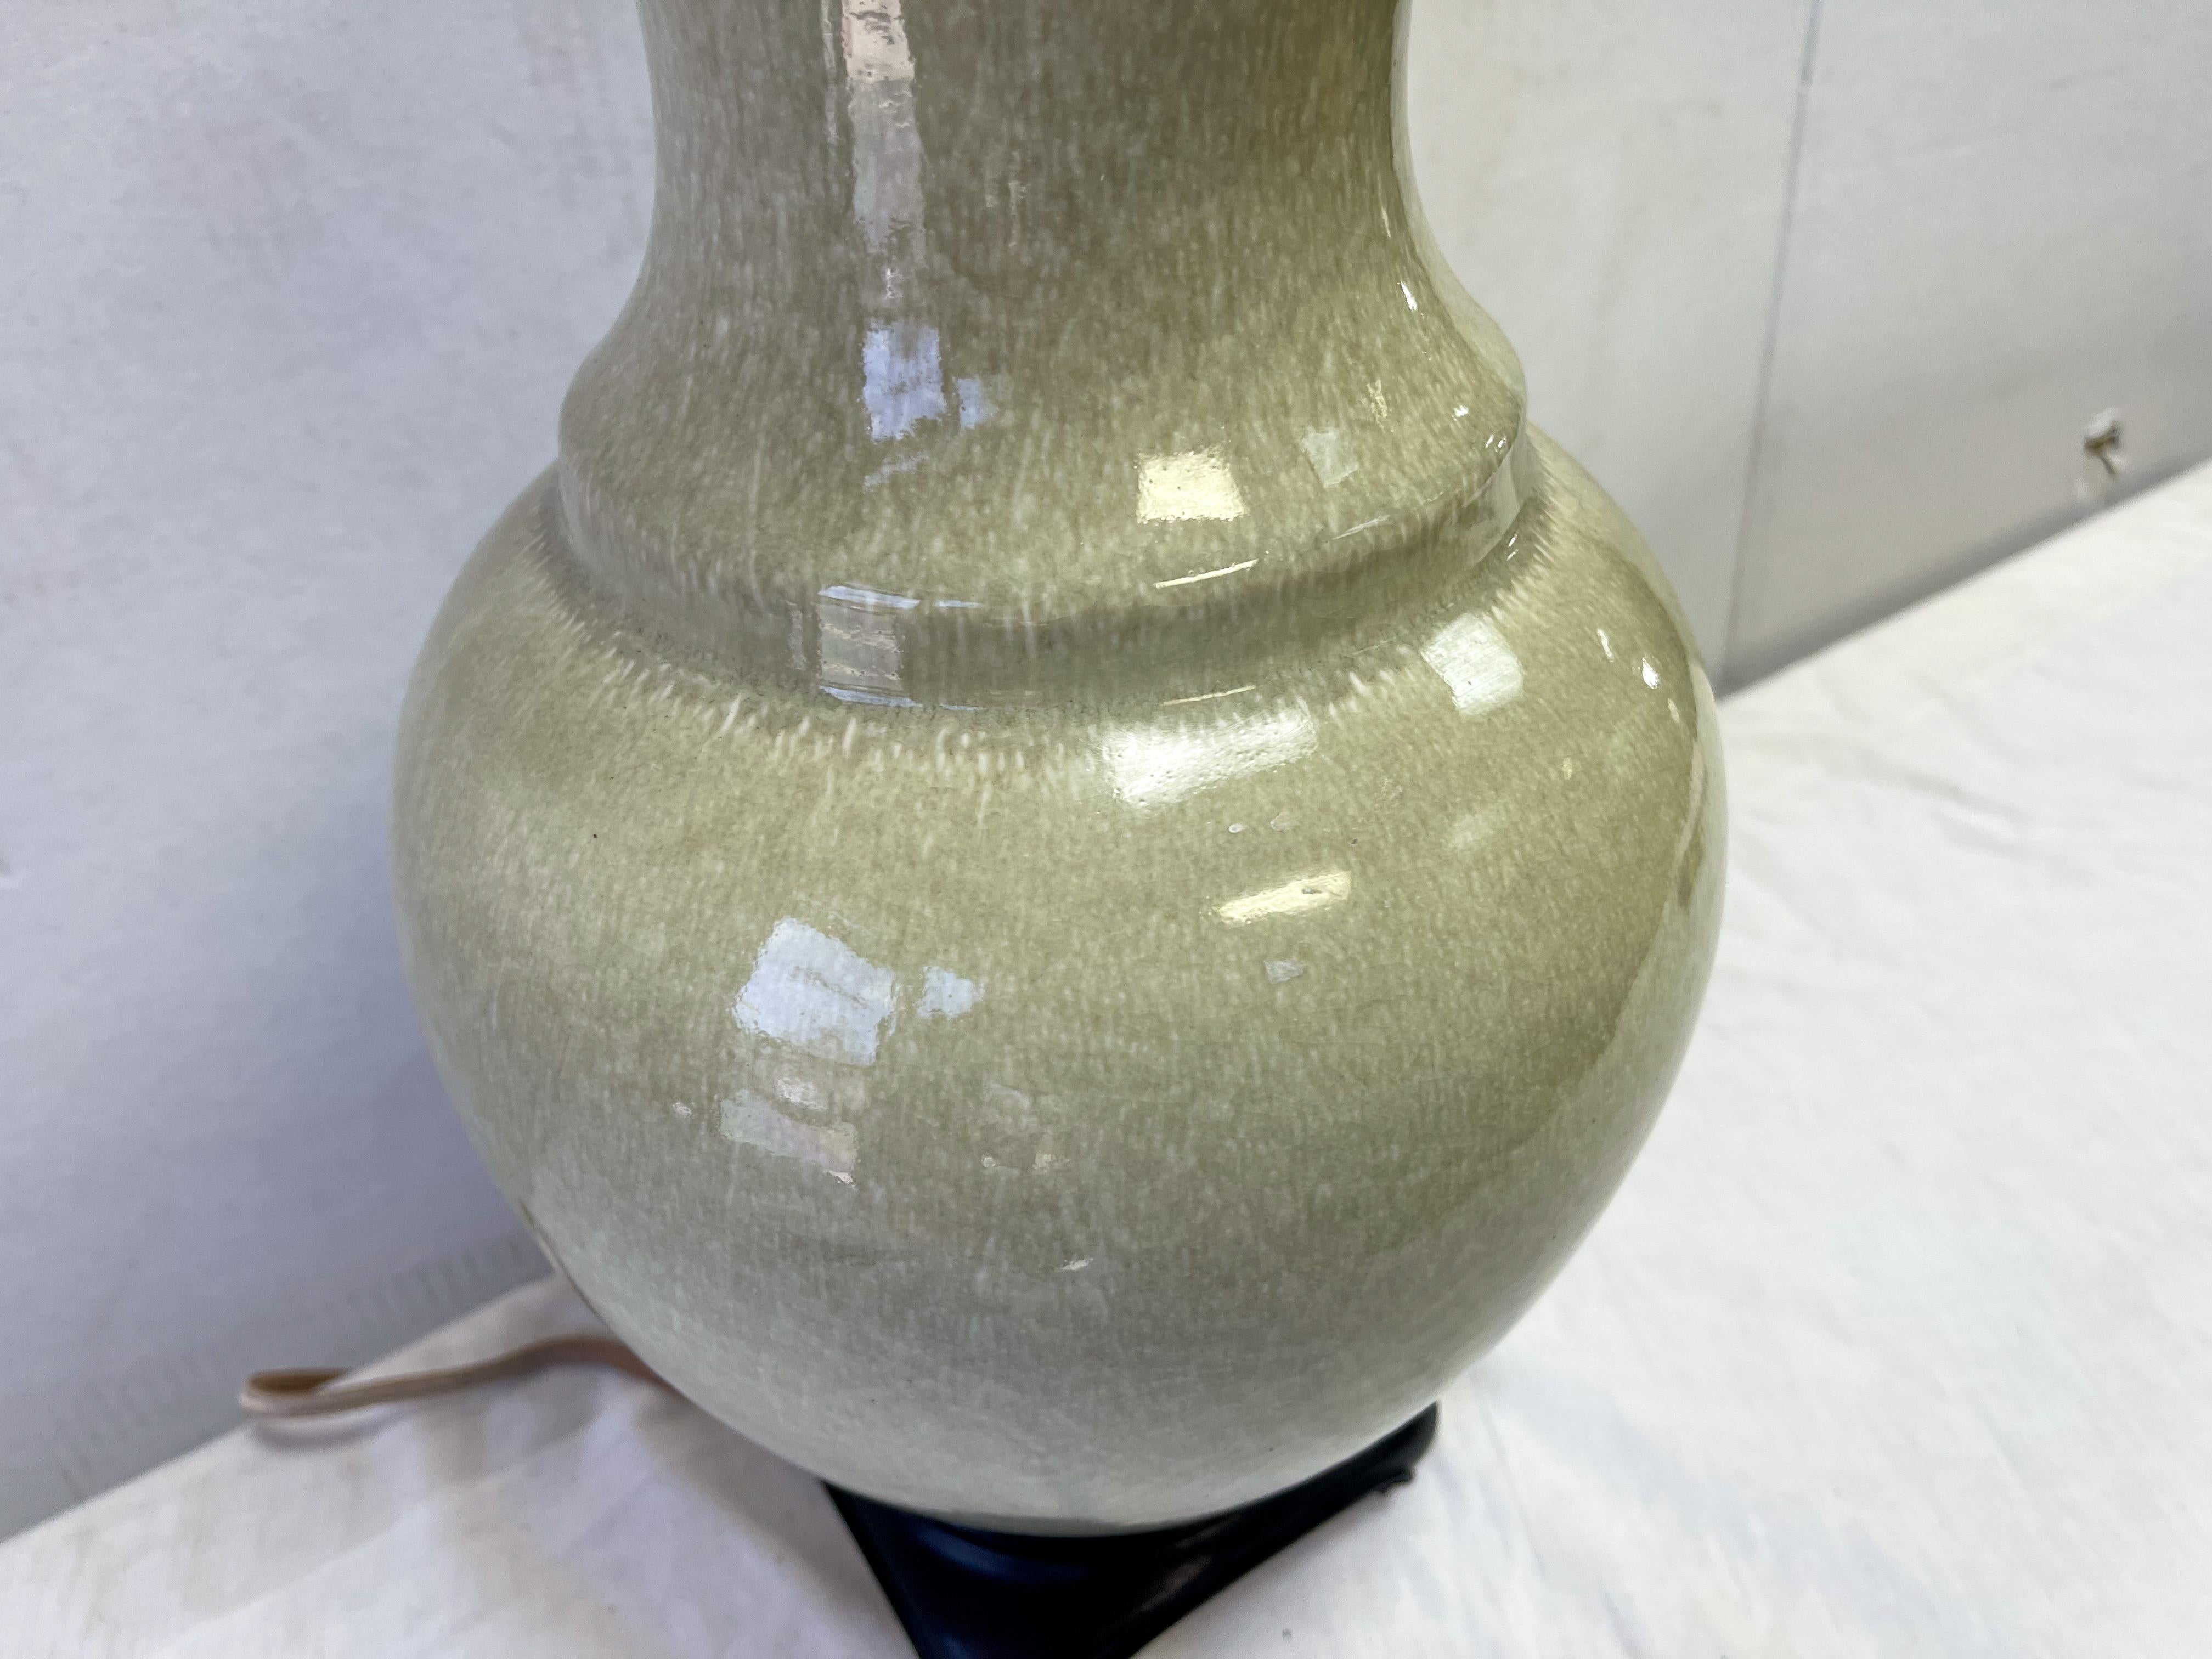 20th Century Mid-Century Asian Style Crackle Glaze Celadon Table Lamps Att. Paul Hanson, Pair For Sale